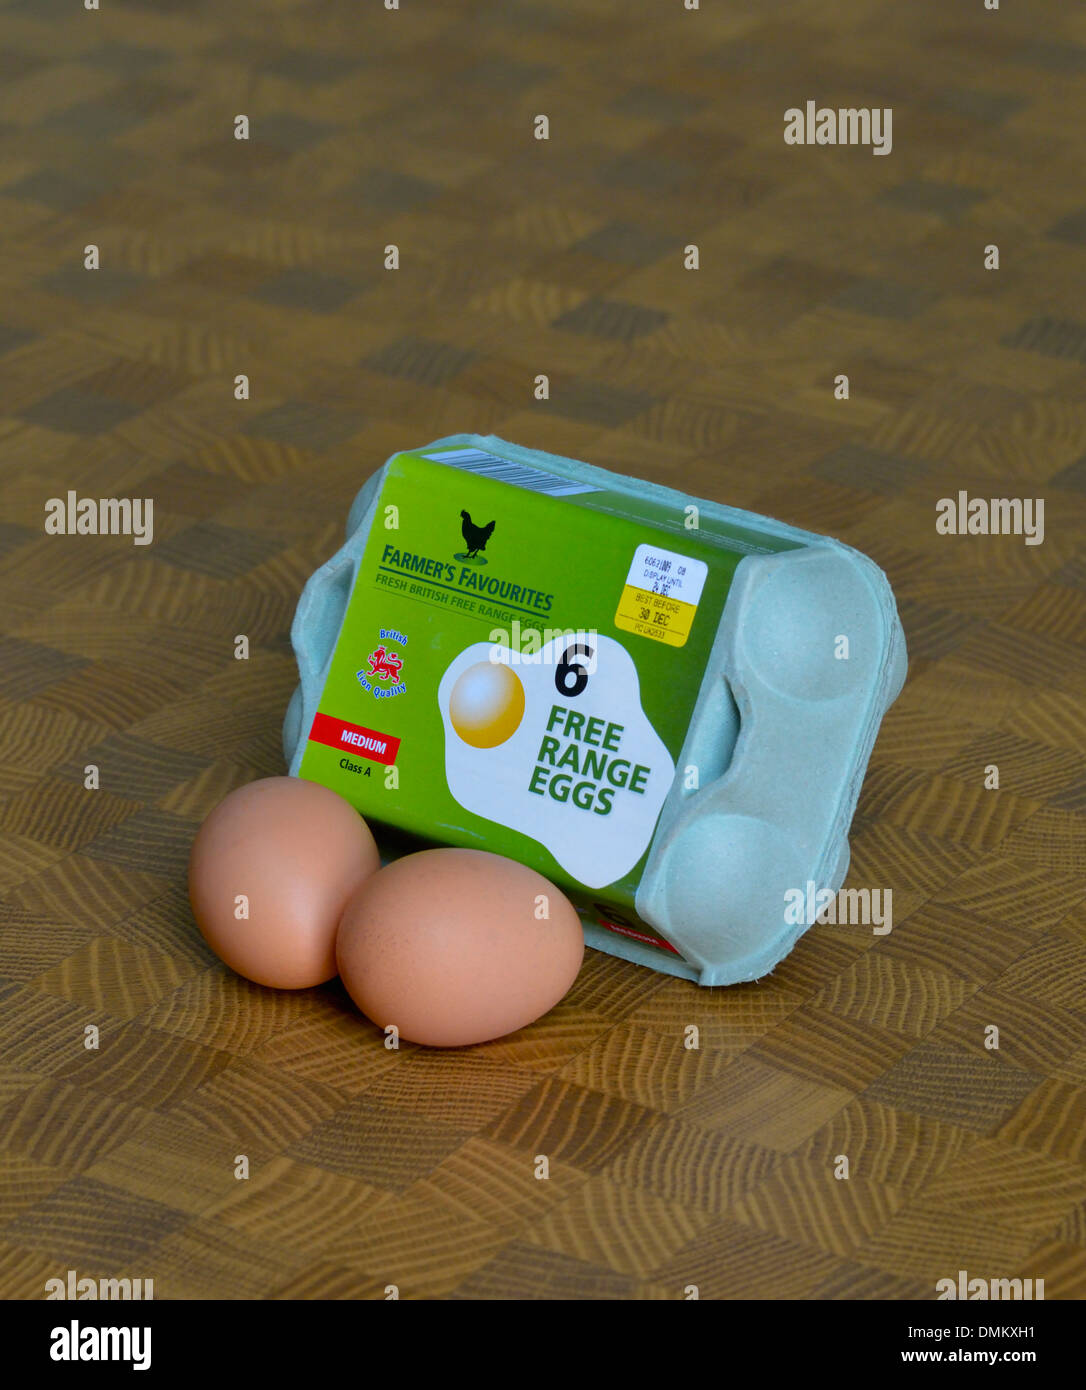 Free range eggs with box of six. Stock Photo